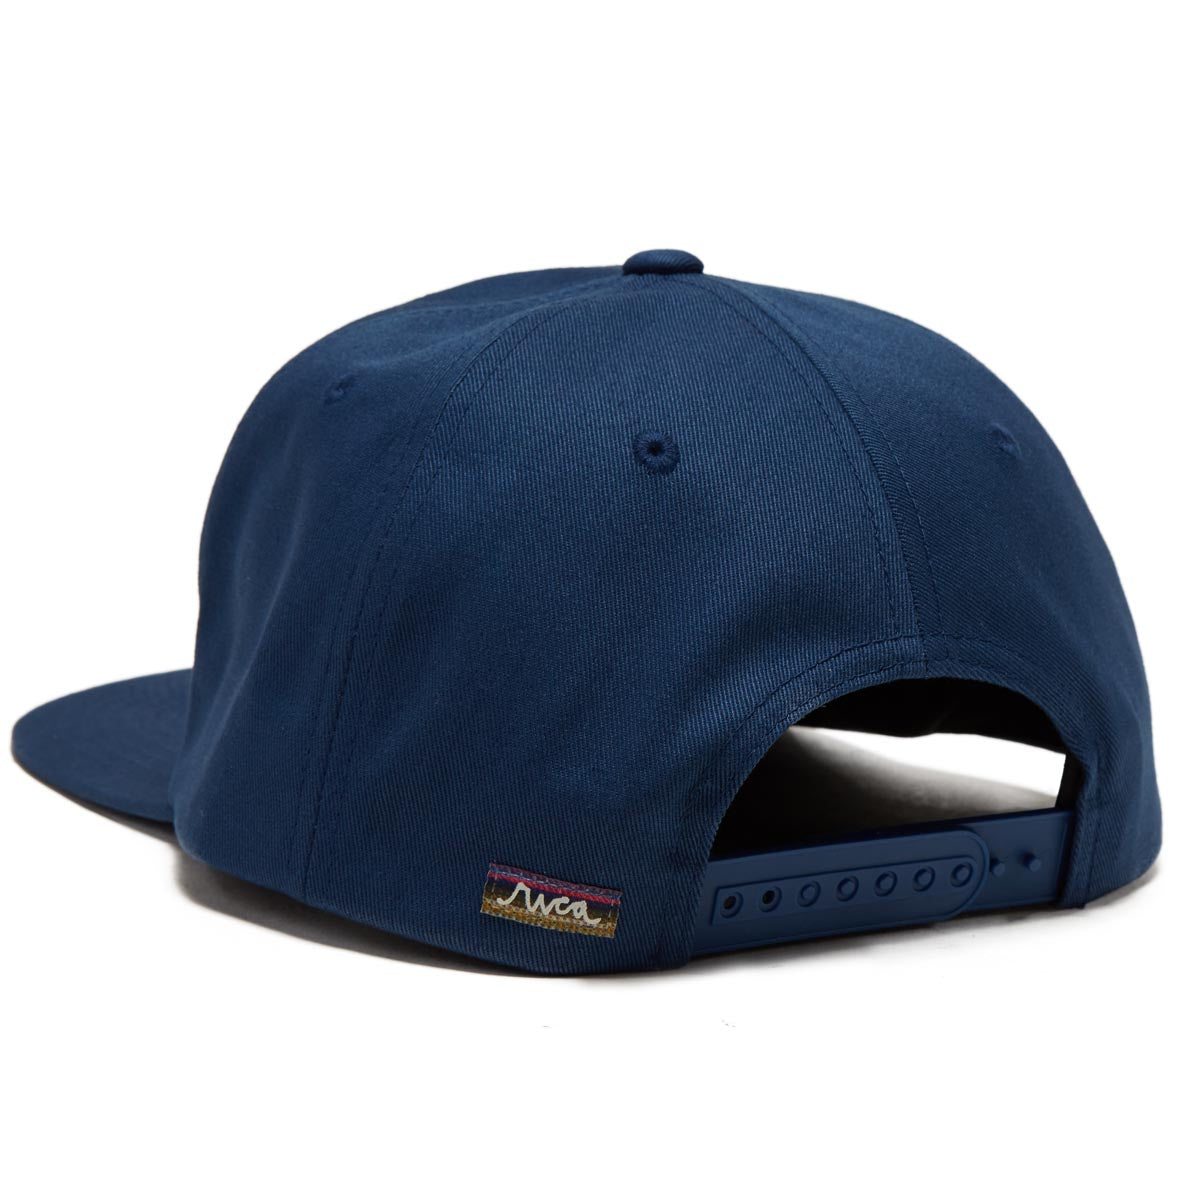 RVCA Oblow Snapback Hat - Slate Blue image 2